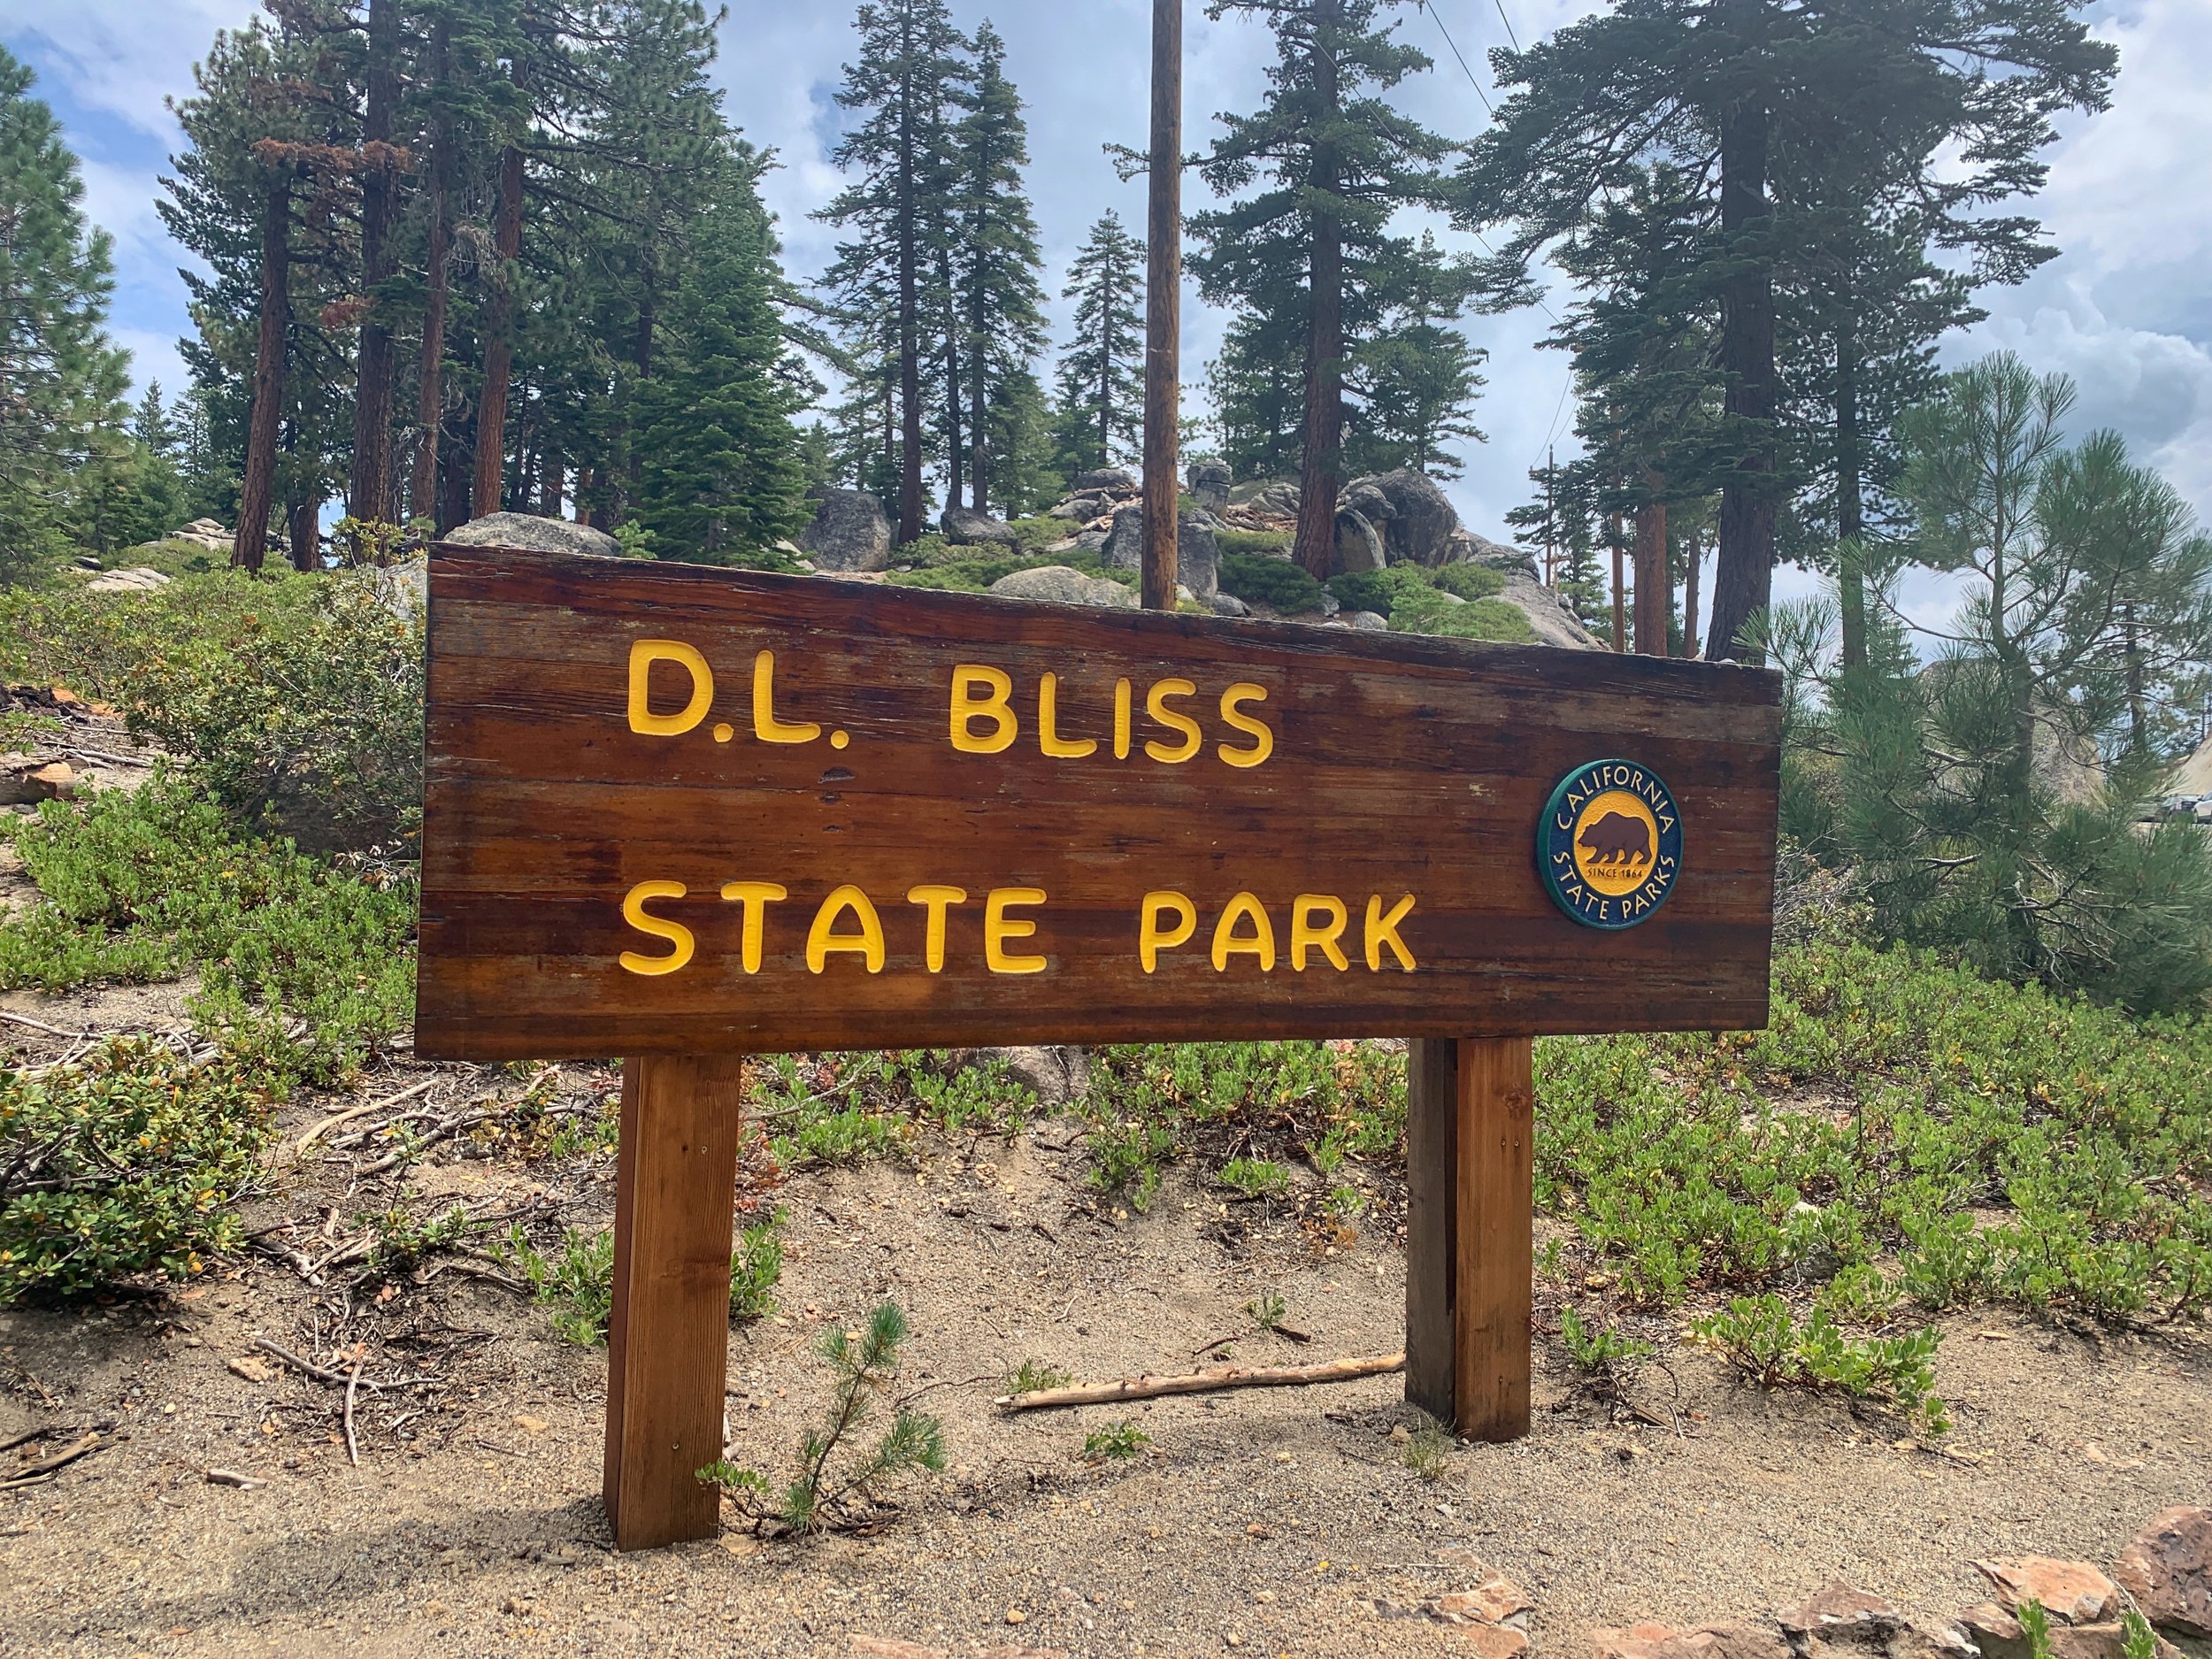 D.L. Bliss State Park